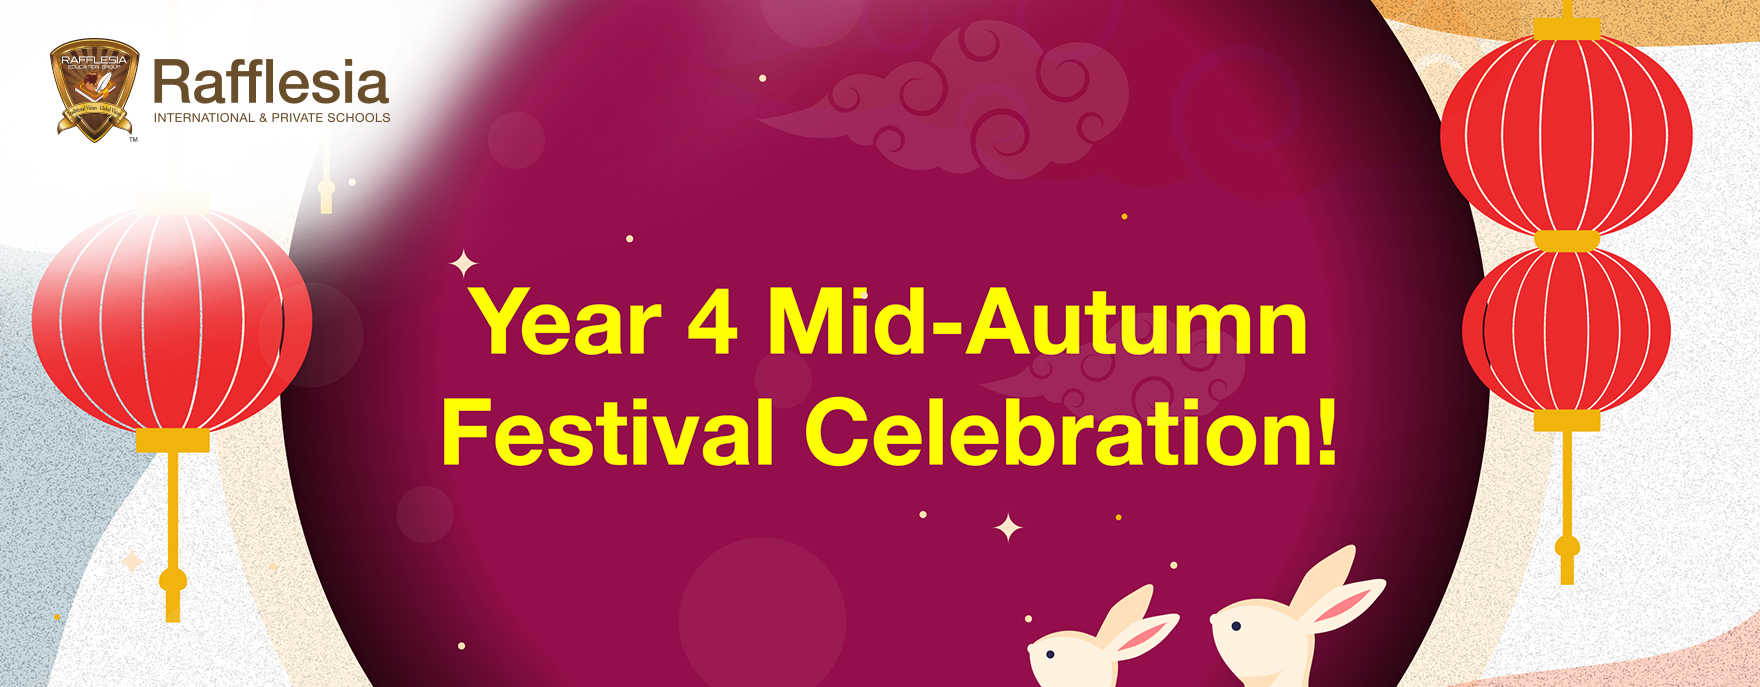 Year 4 Mid-Autumn Festival Celebration!